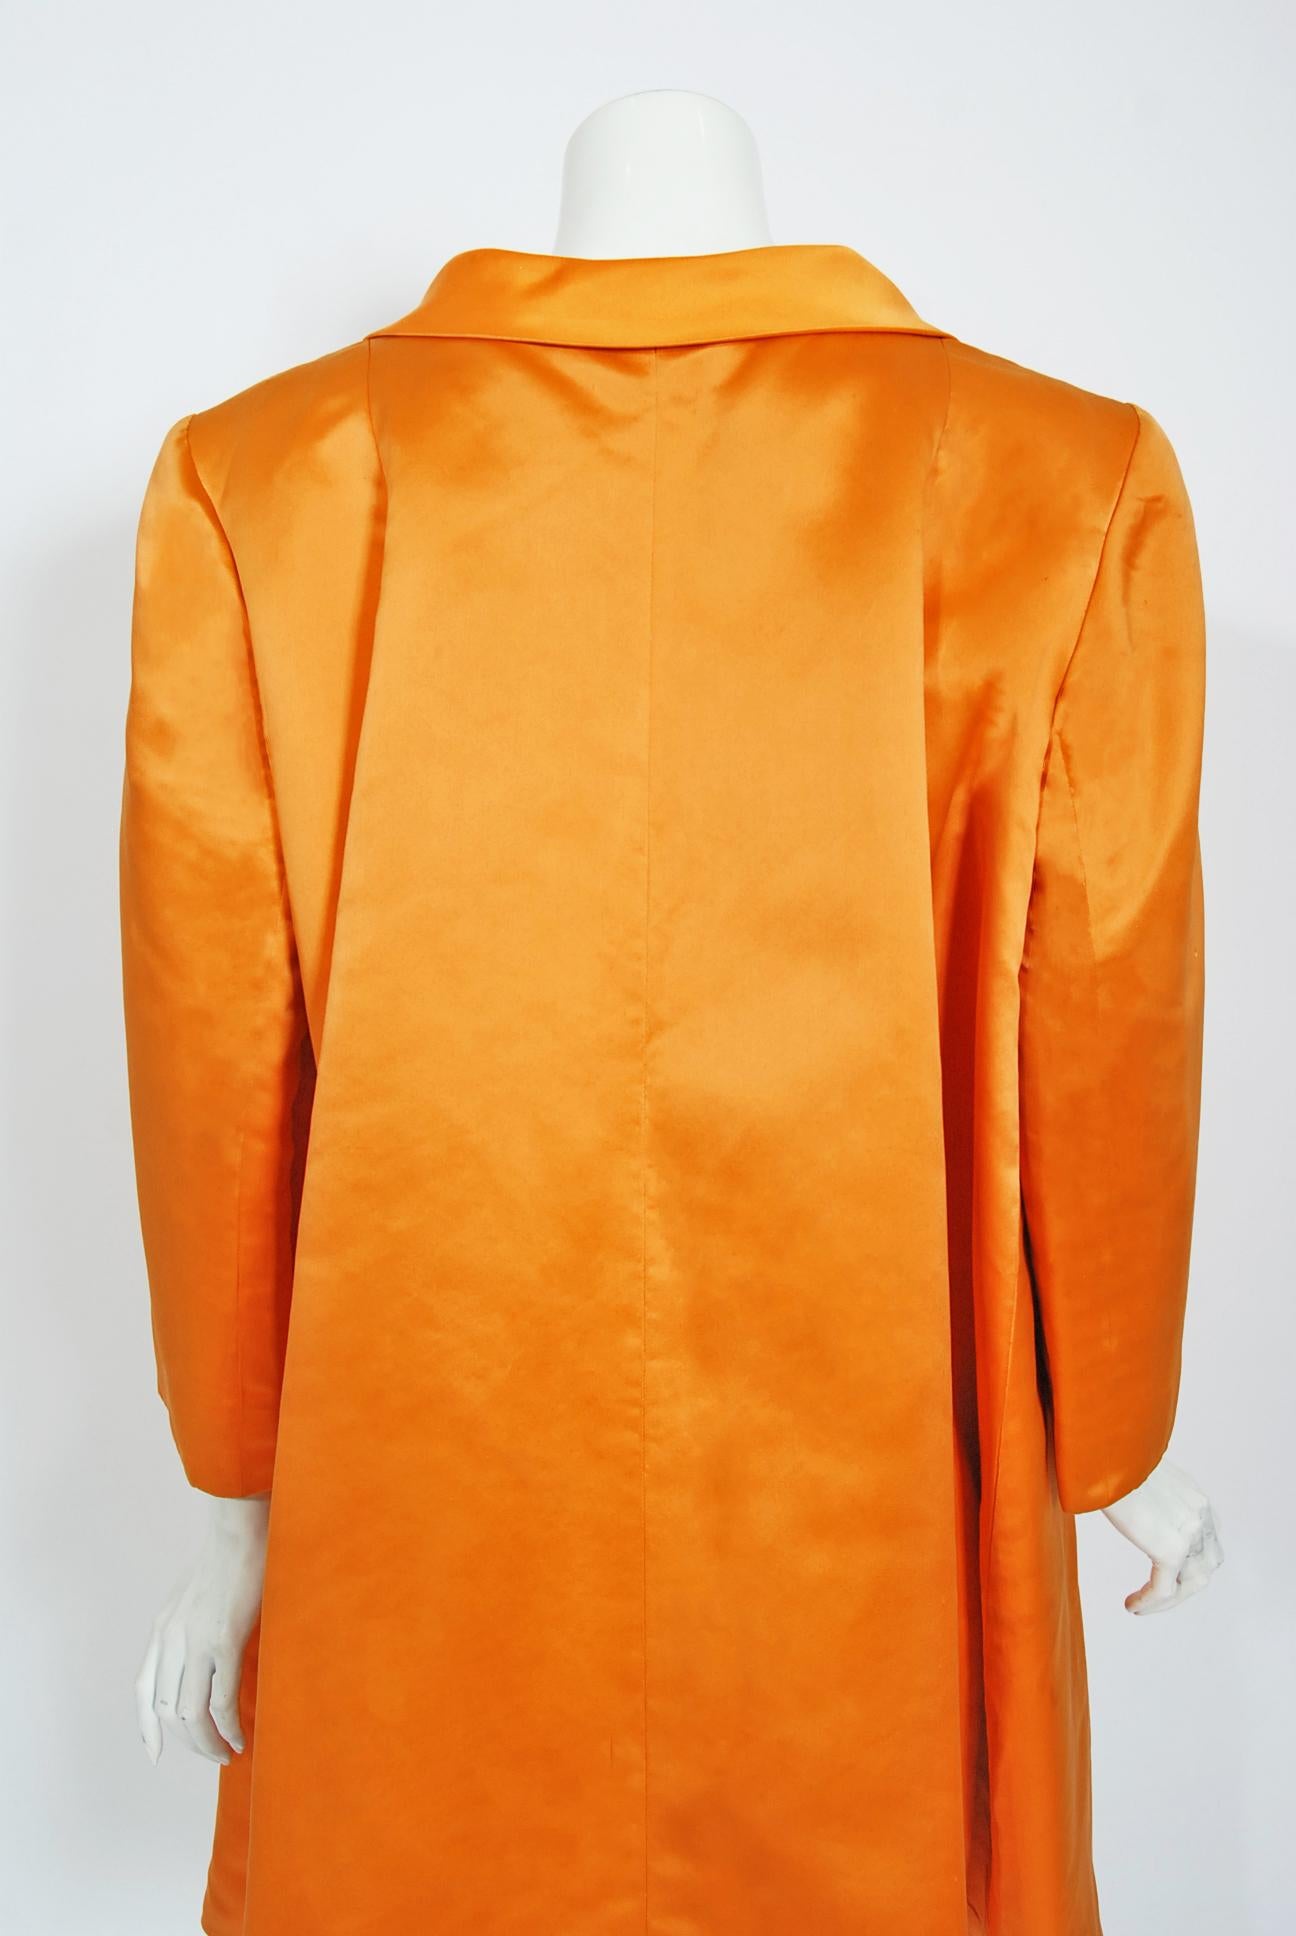 Vintage 1958 Balenciaga Haute Couture Orange Duchess Satin Swing Coat Jacket  For Sale 1